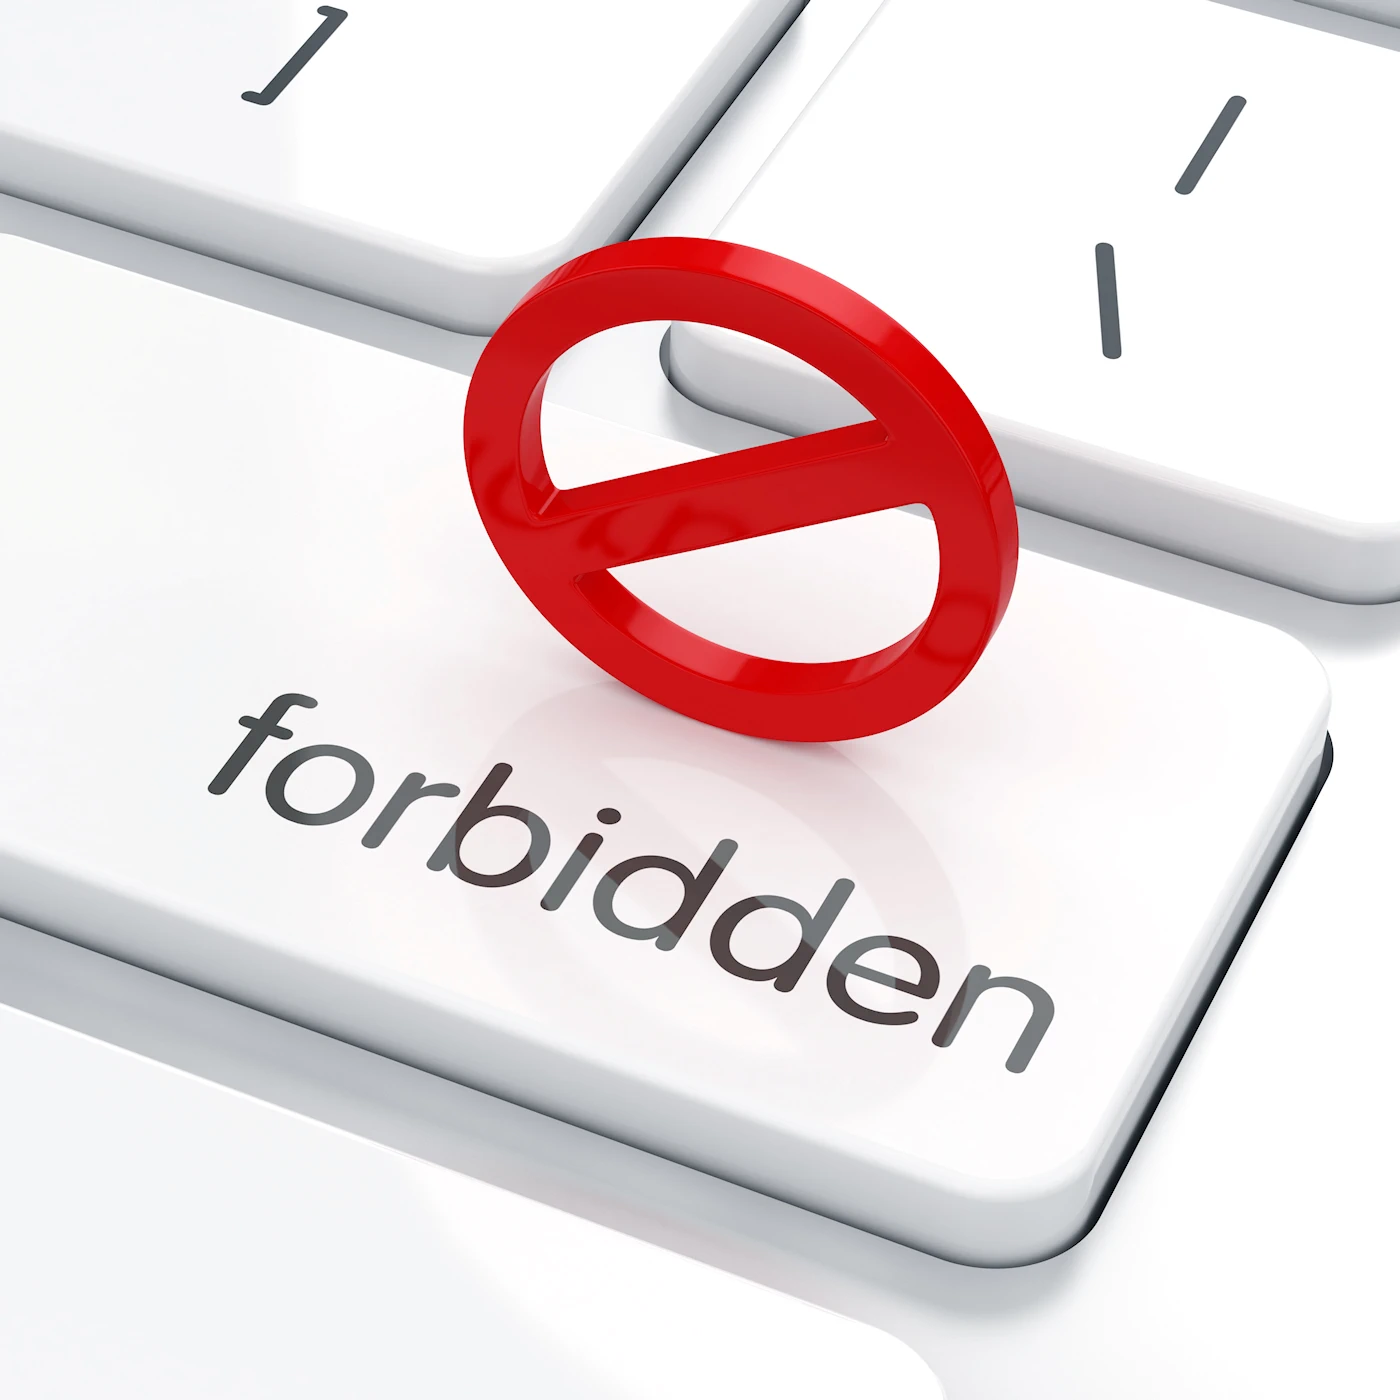 internet-censorship-forbidden-written-on-keyboard-23208292-123rf